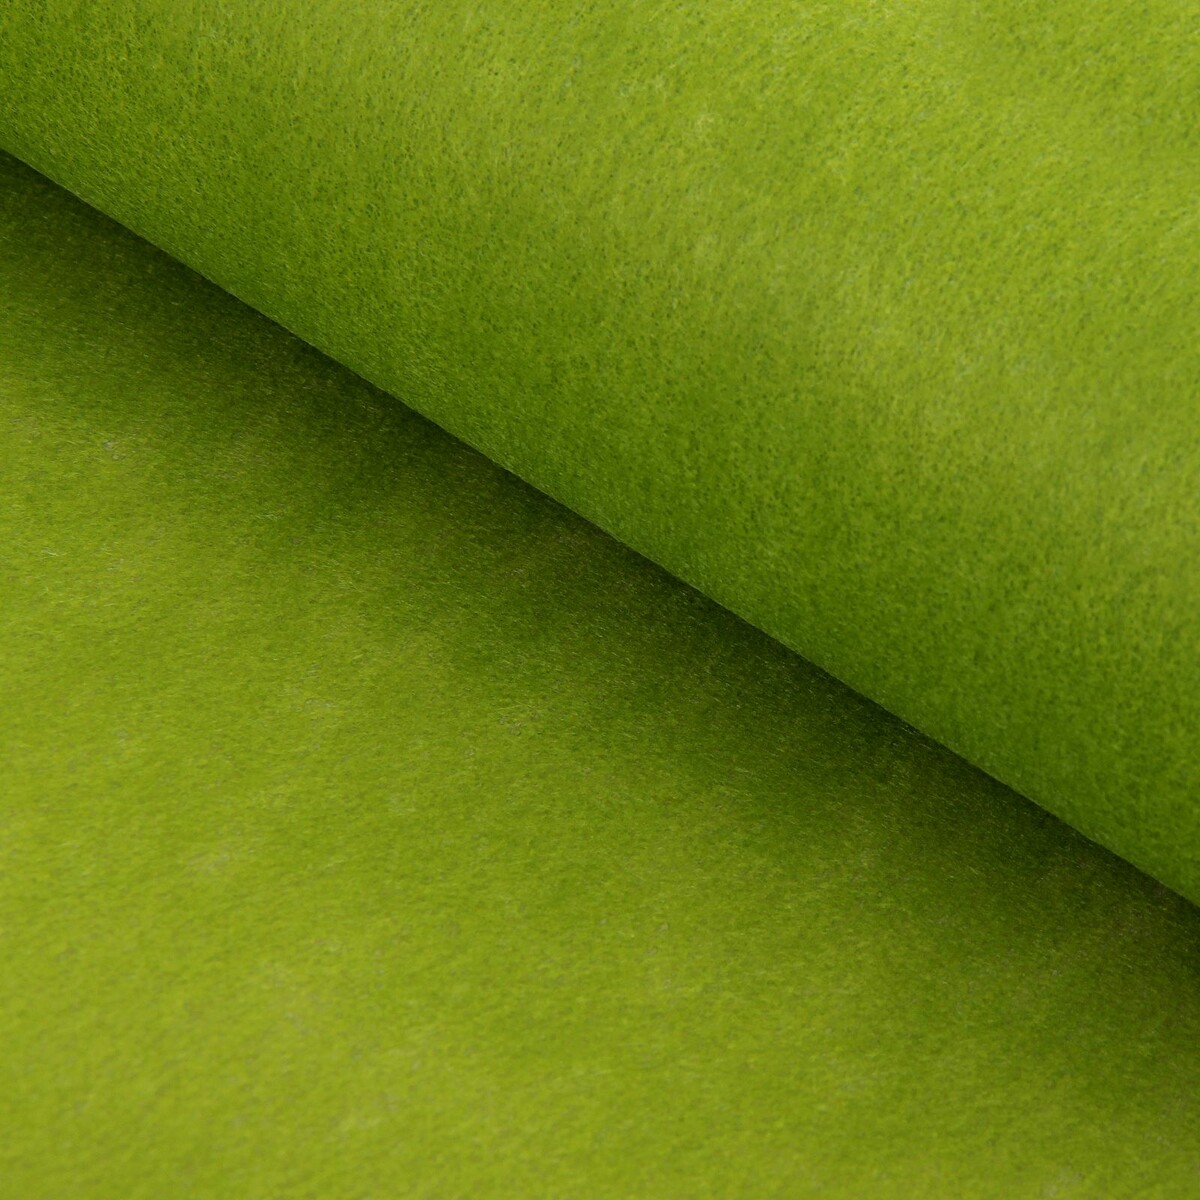 Фетр для упаковок и поделок, однотонный, оливковый, двусторонний, зеленый, рулон 1шт., 50 см x 15 м фетр для декора и флористики однотонный бургундский красный рулон 1шт 50 см x 15 м